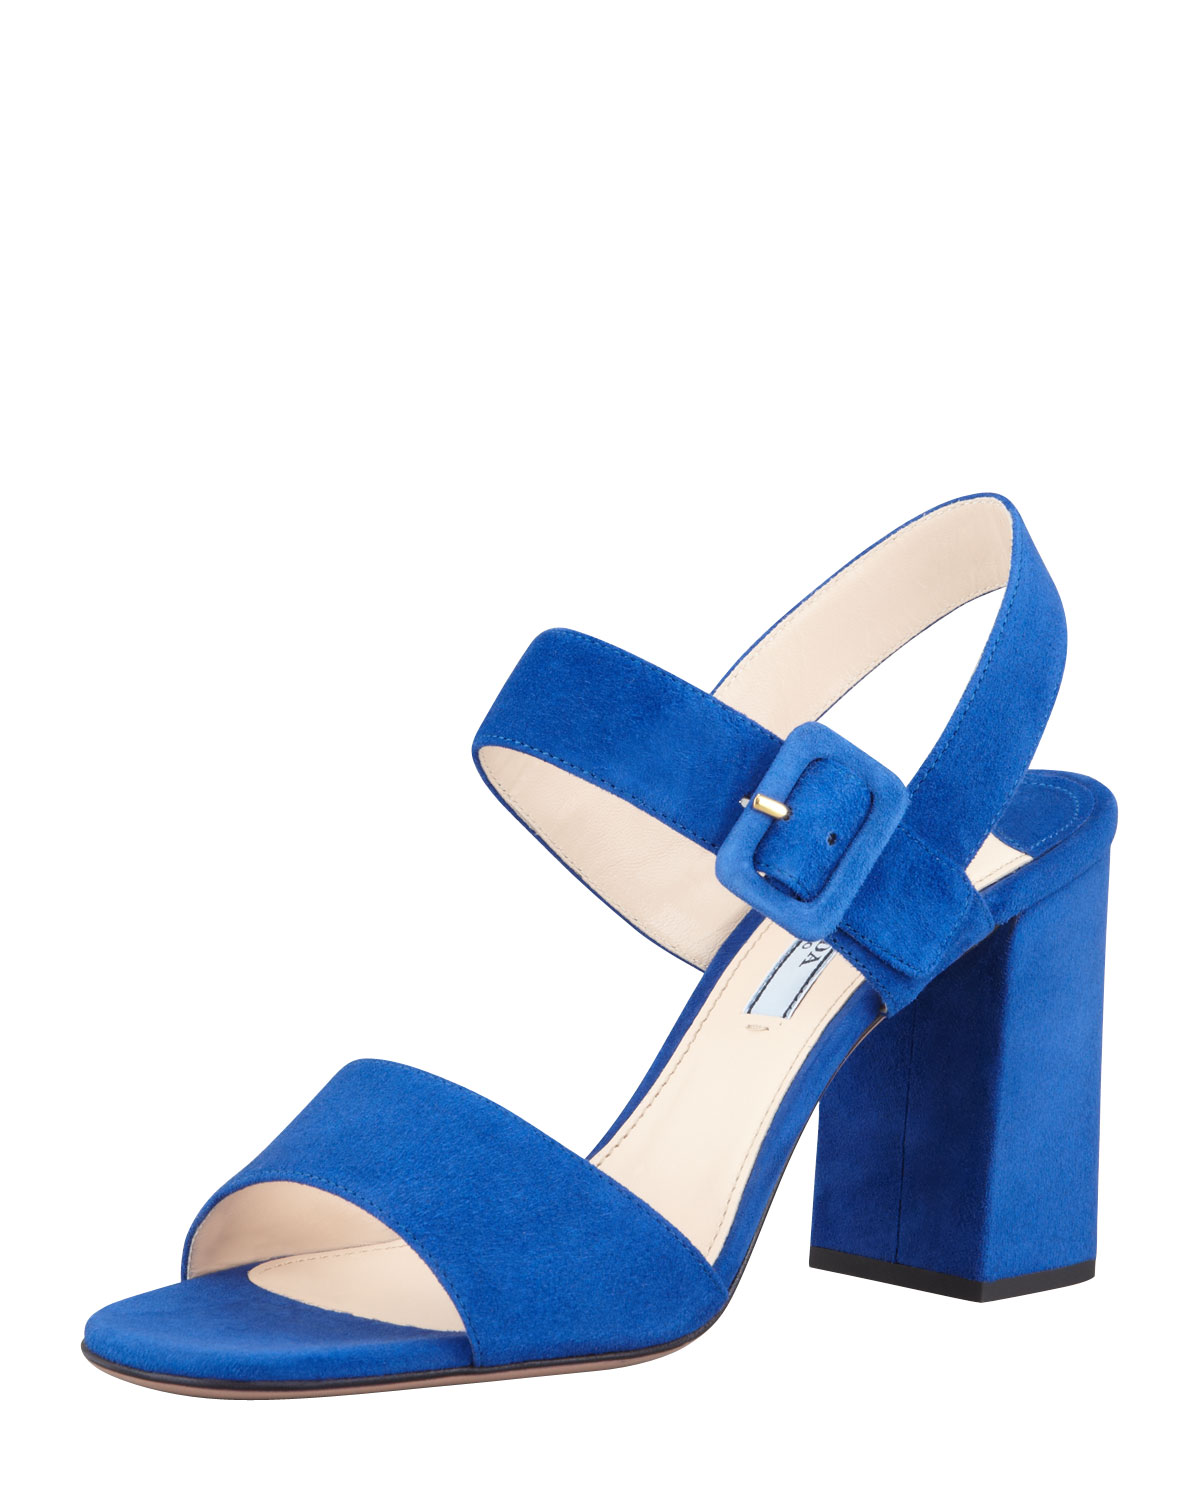 Lyst - Prada Suede Blockheel Sandals in Blue